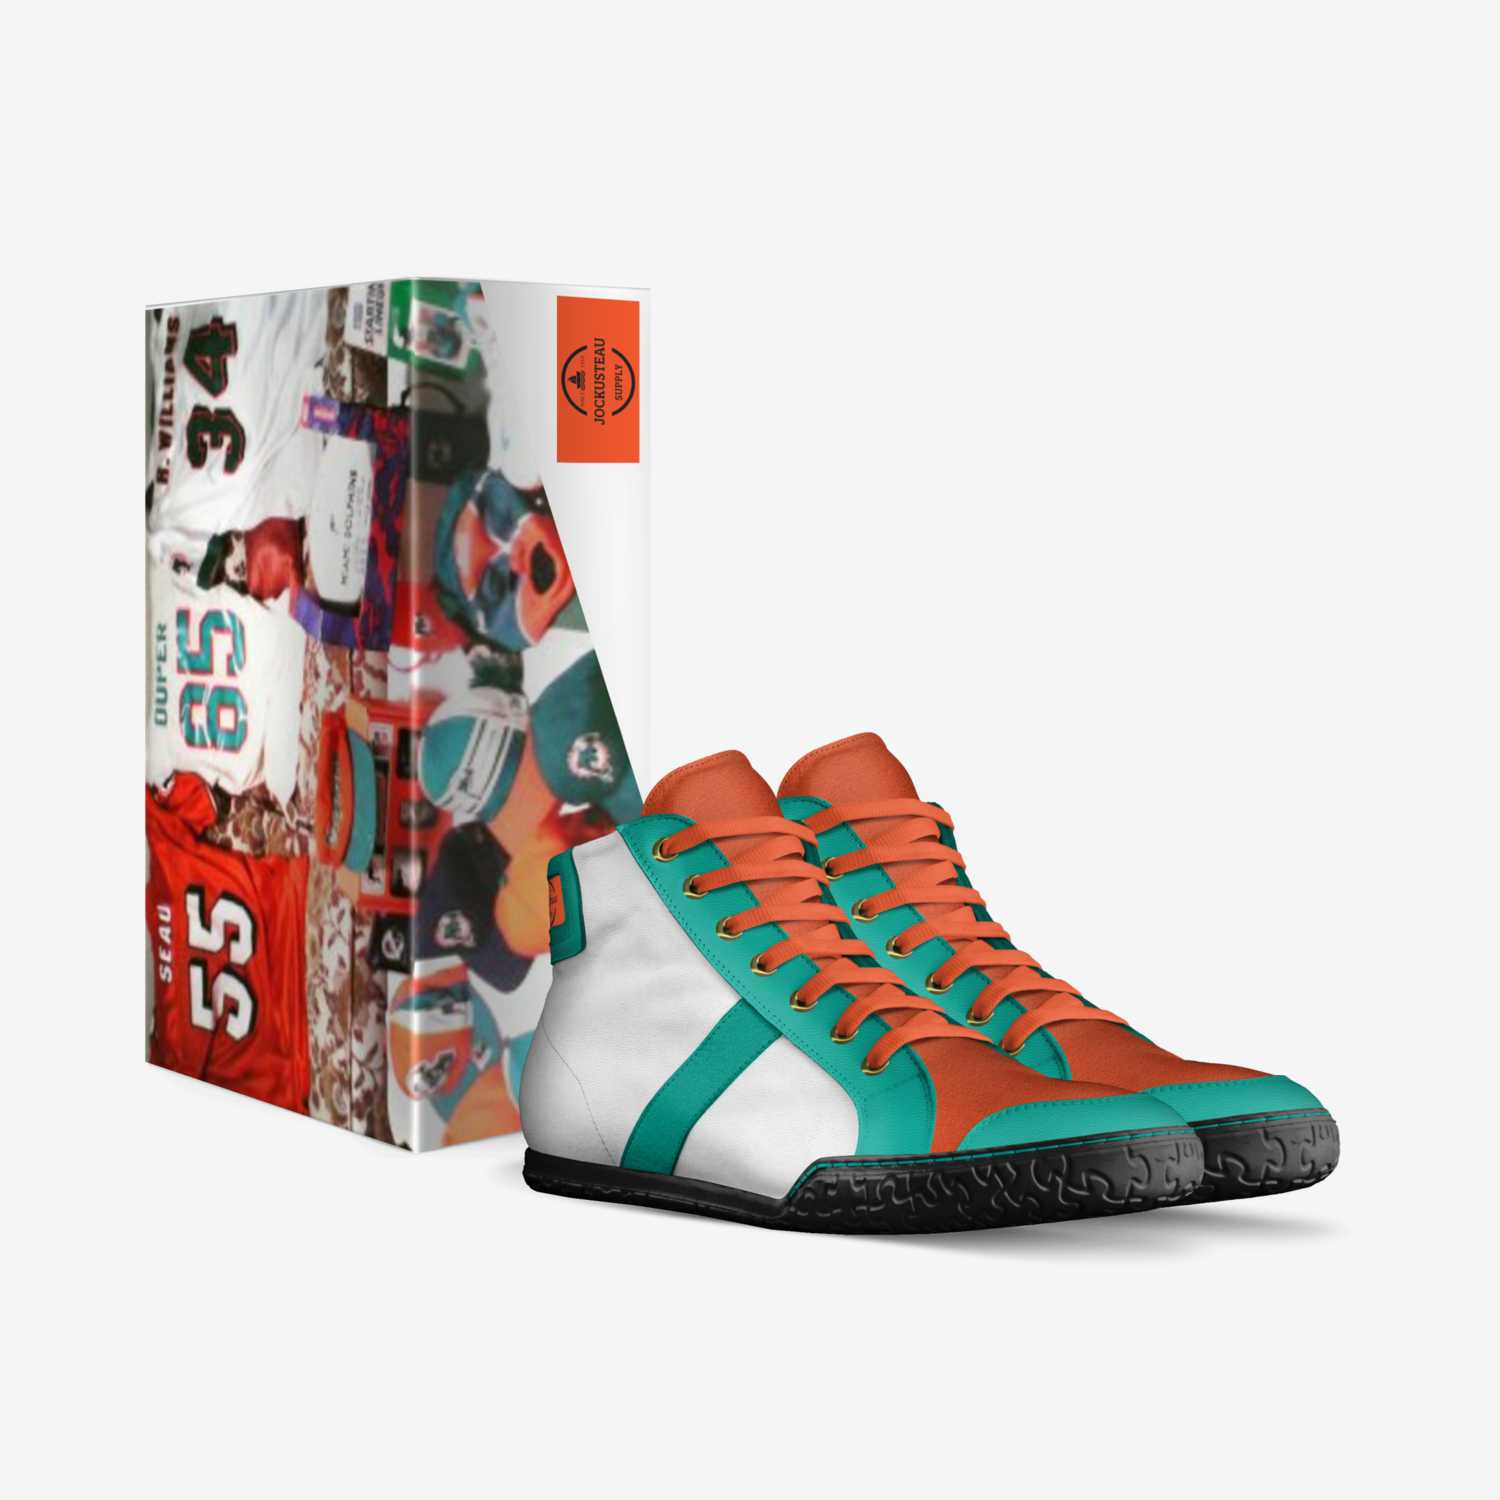 JOCKUSTEAU custom made in Italy shoes by Martin Hendrick | Box view